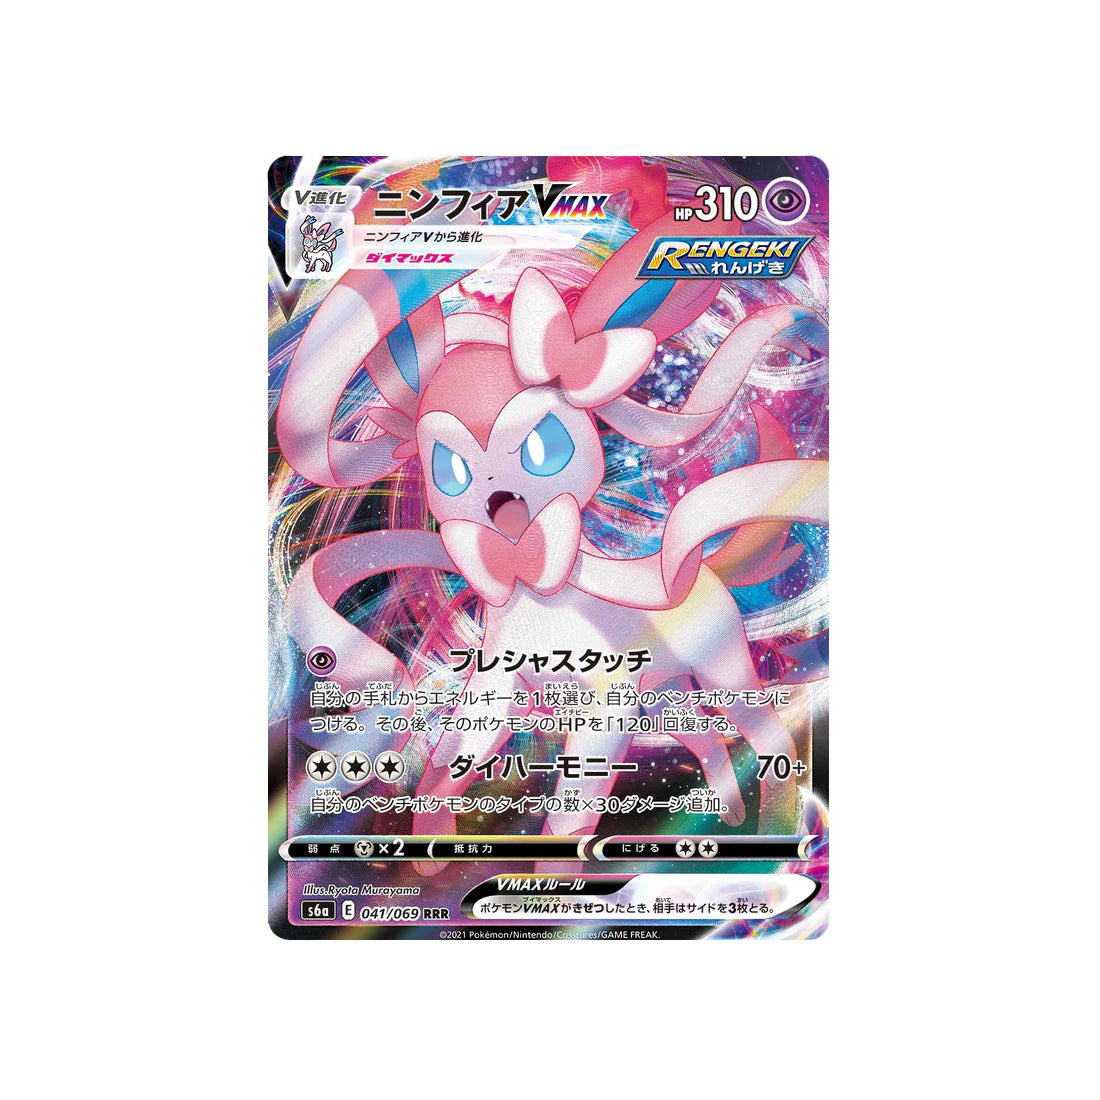 Pokémon Card Nymphali Vmax S6a 041/069 